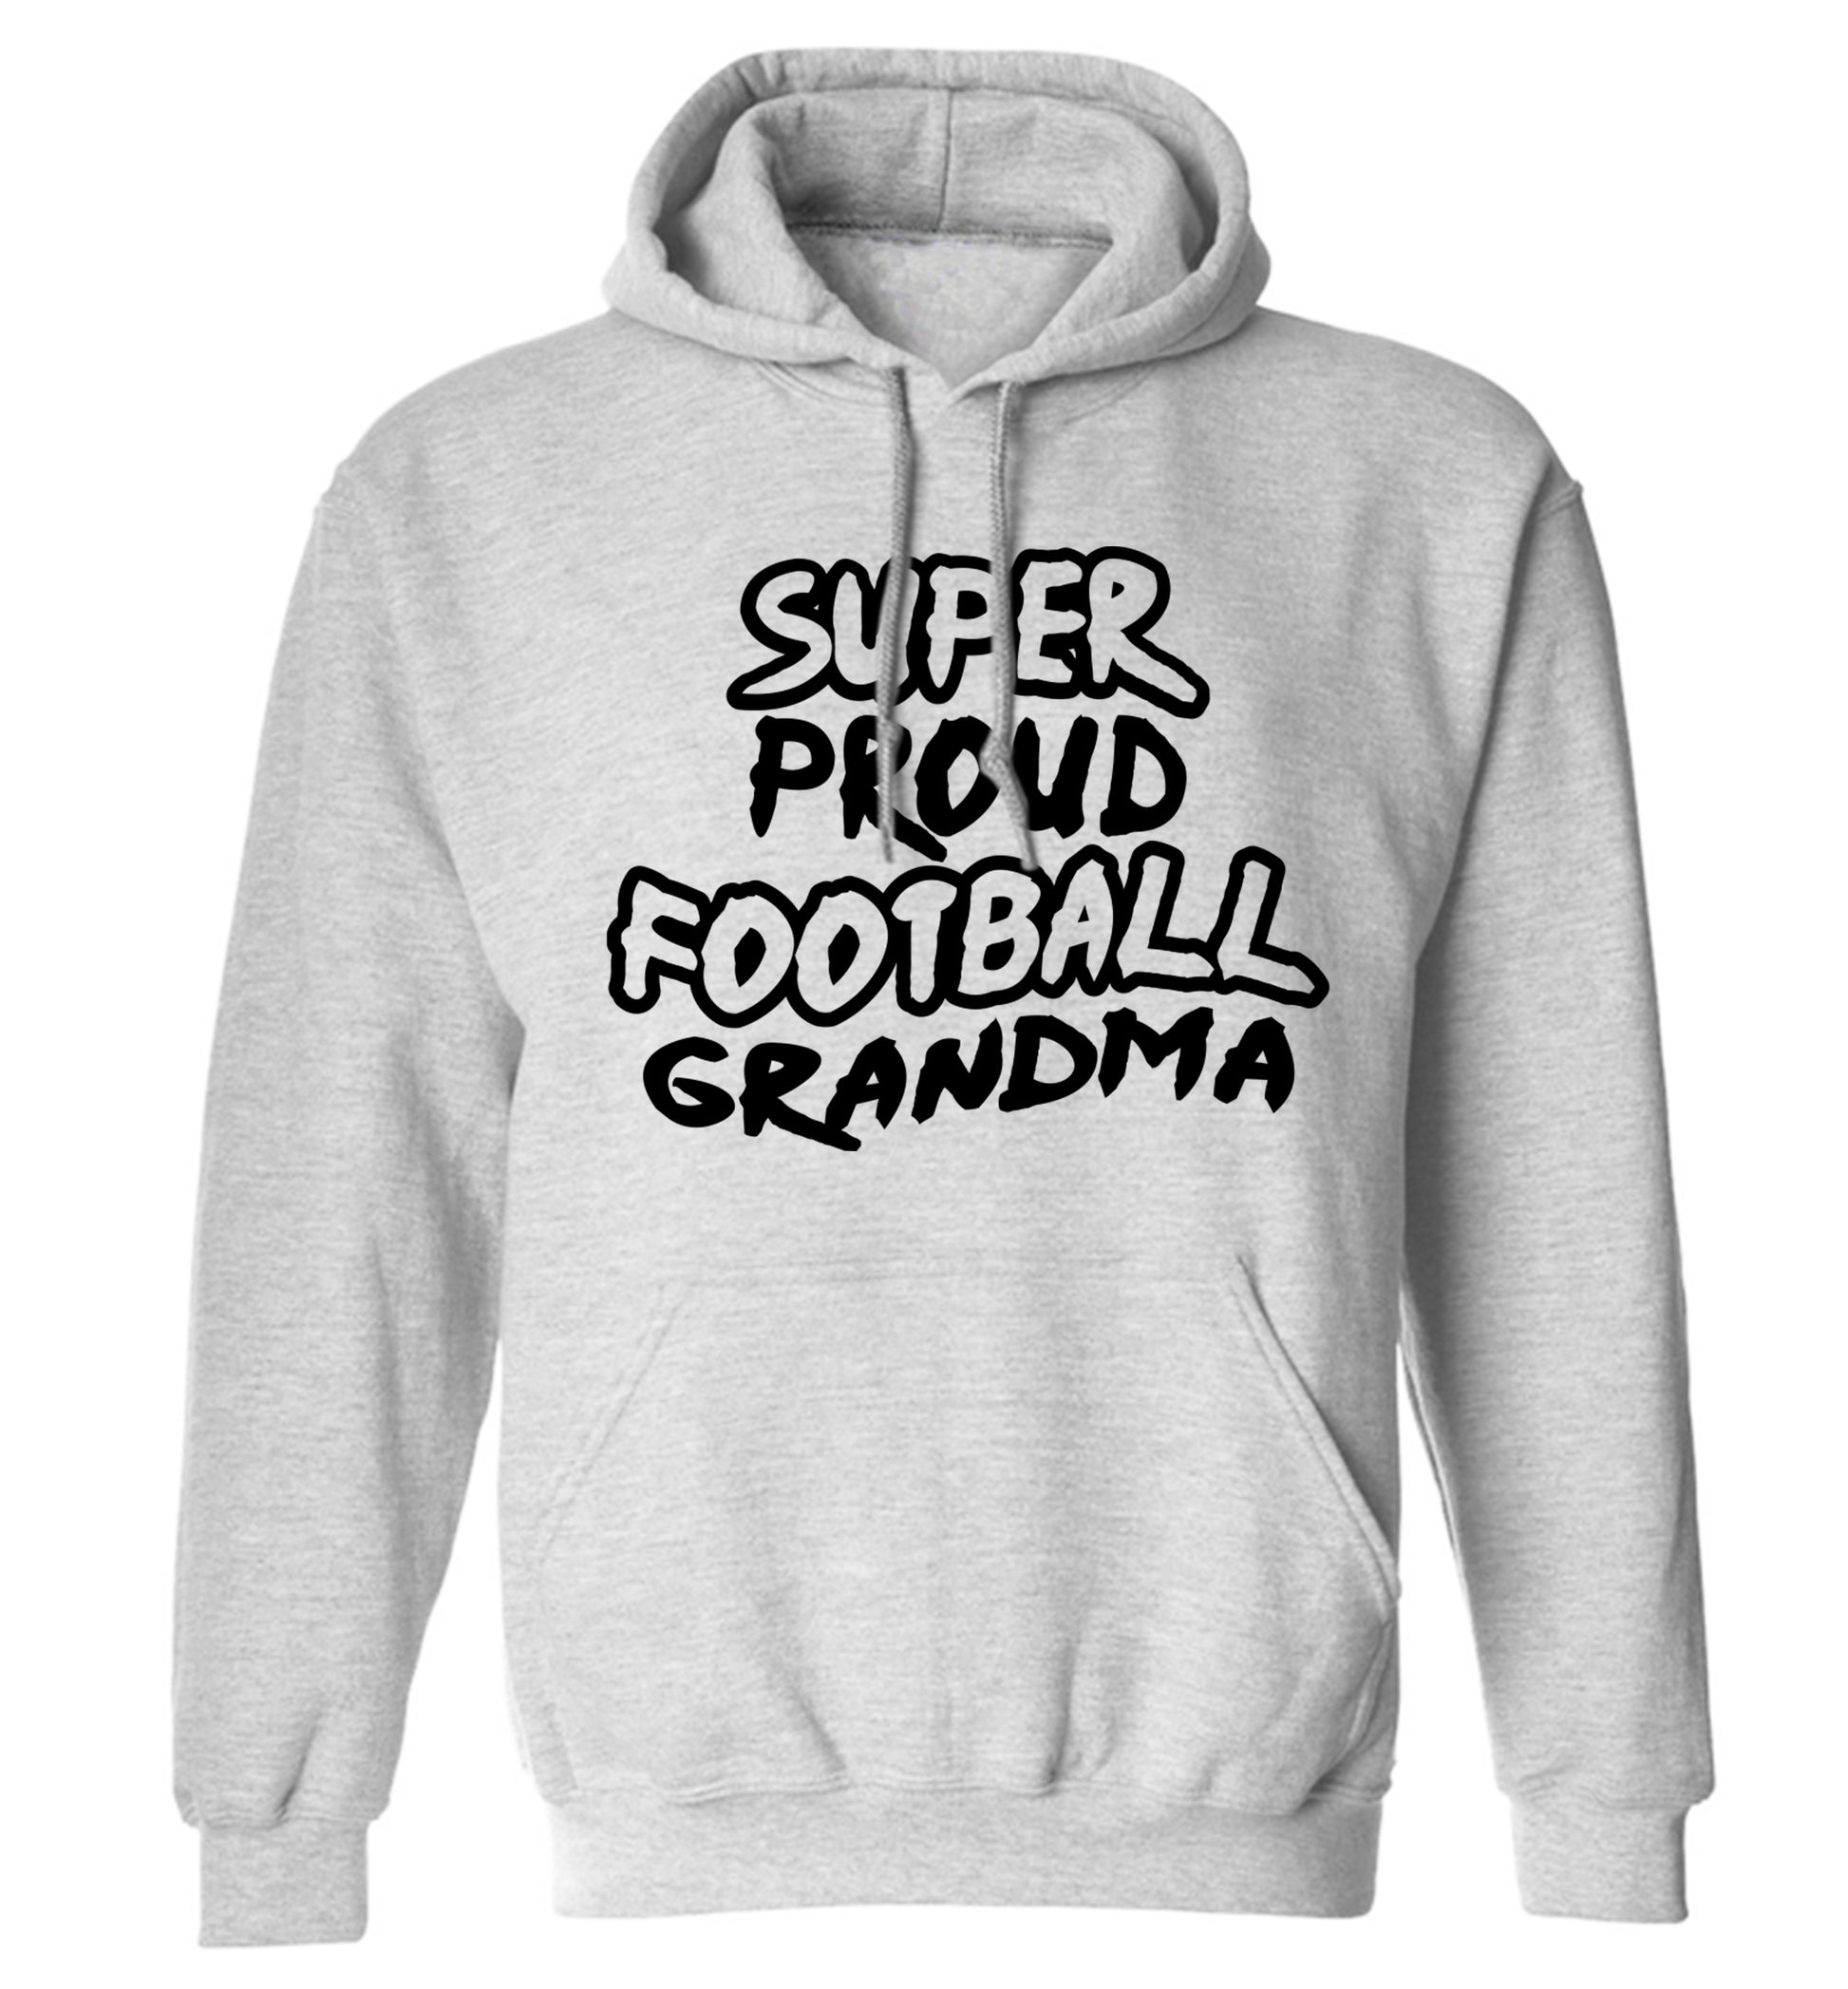 Super proud football grandma adults unisexgrey hoodie 2XL